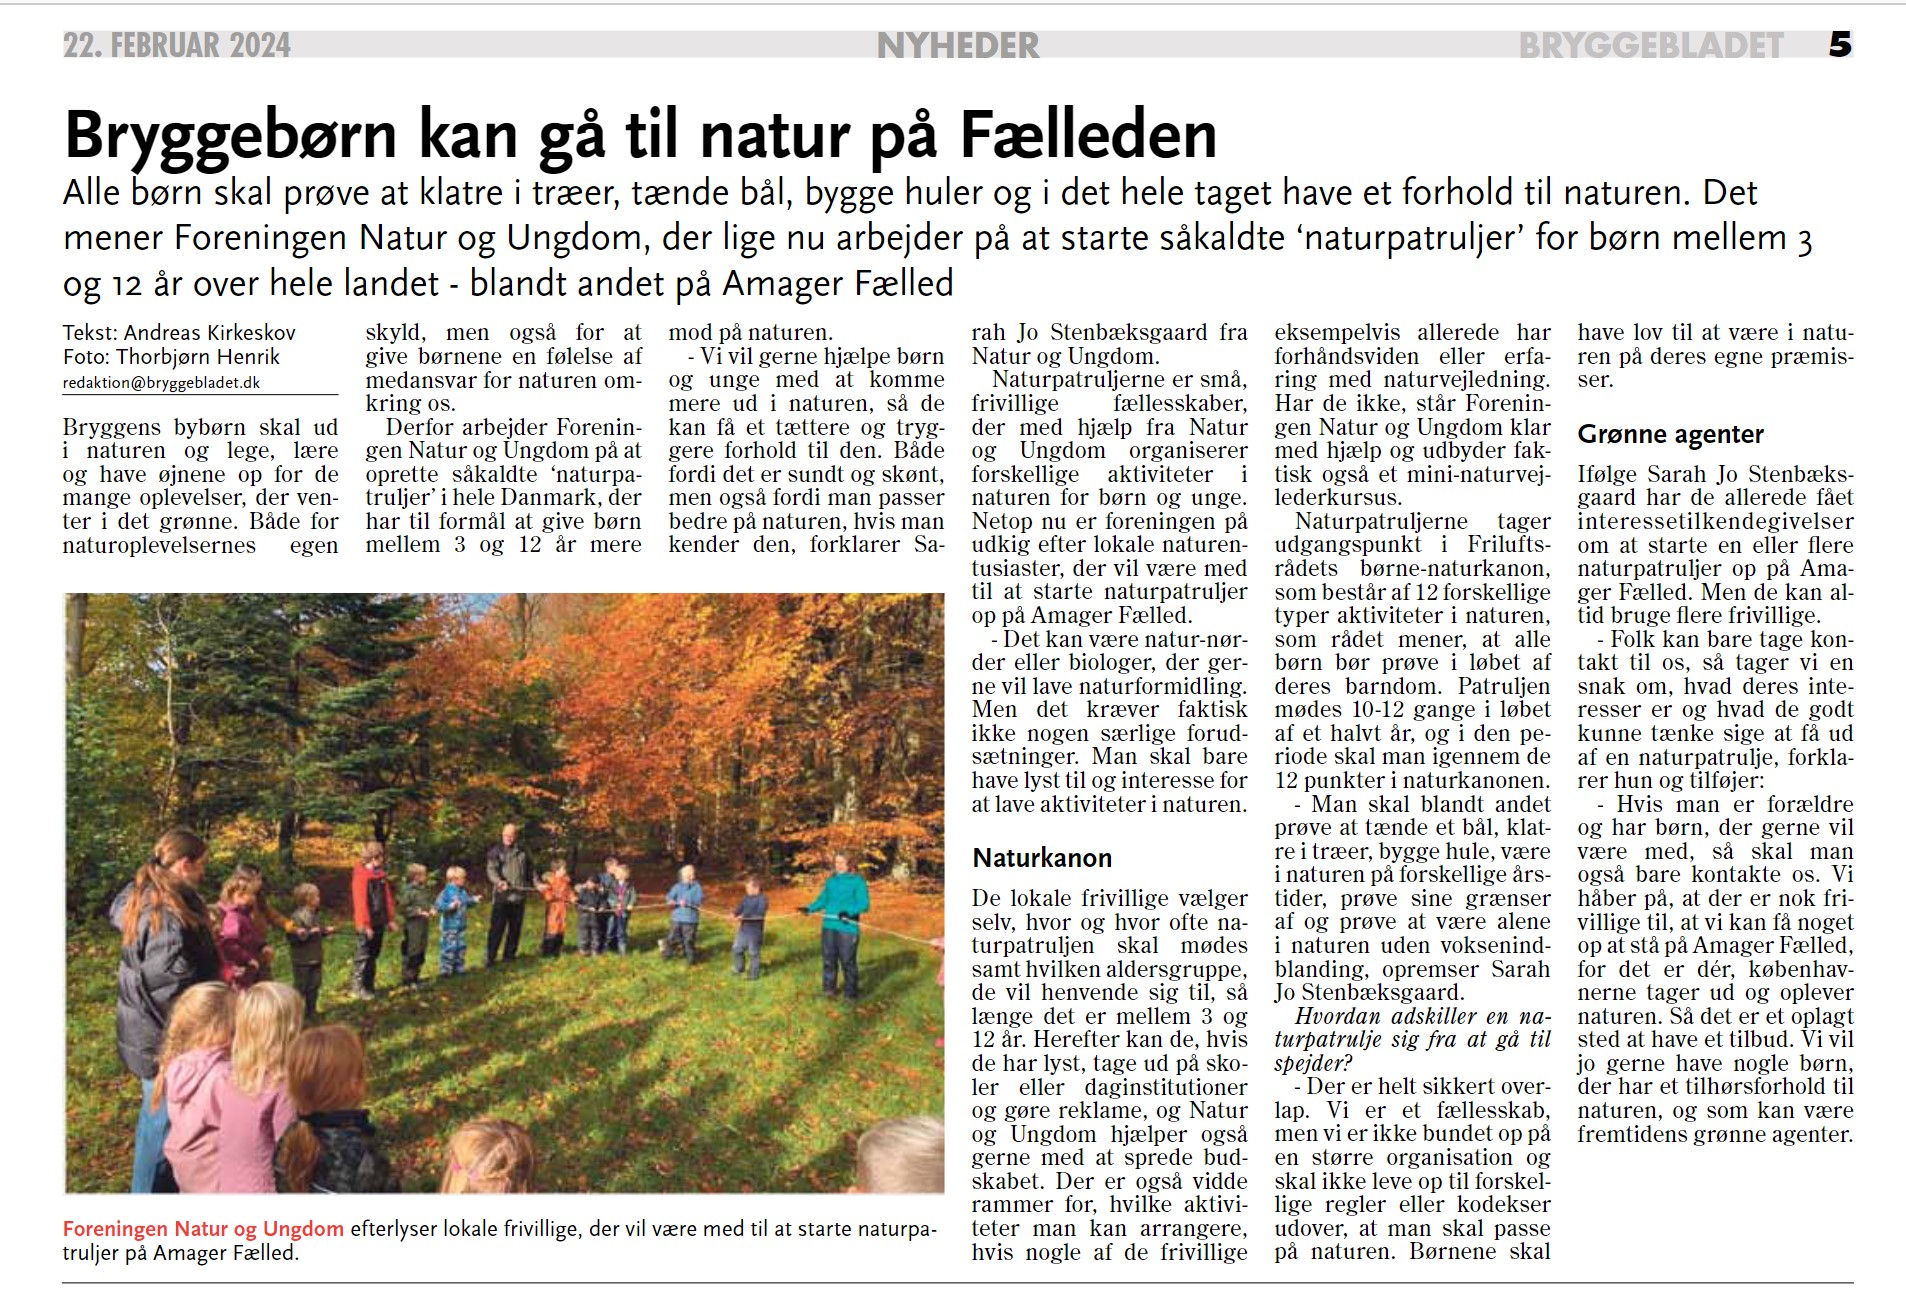 Sammen om naturen i Bryggerbladet - Amager